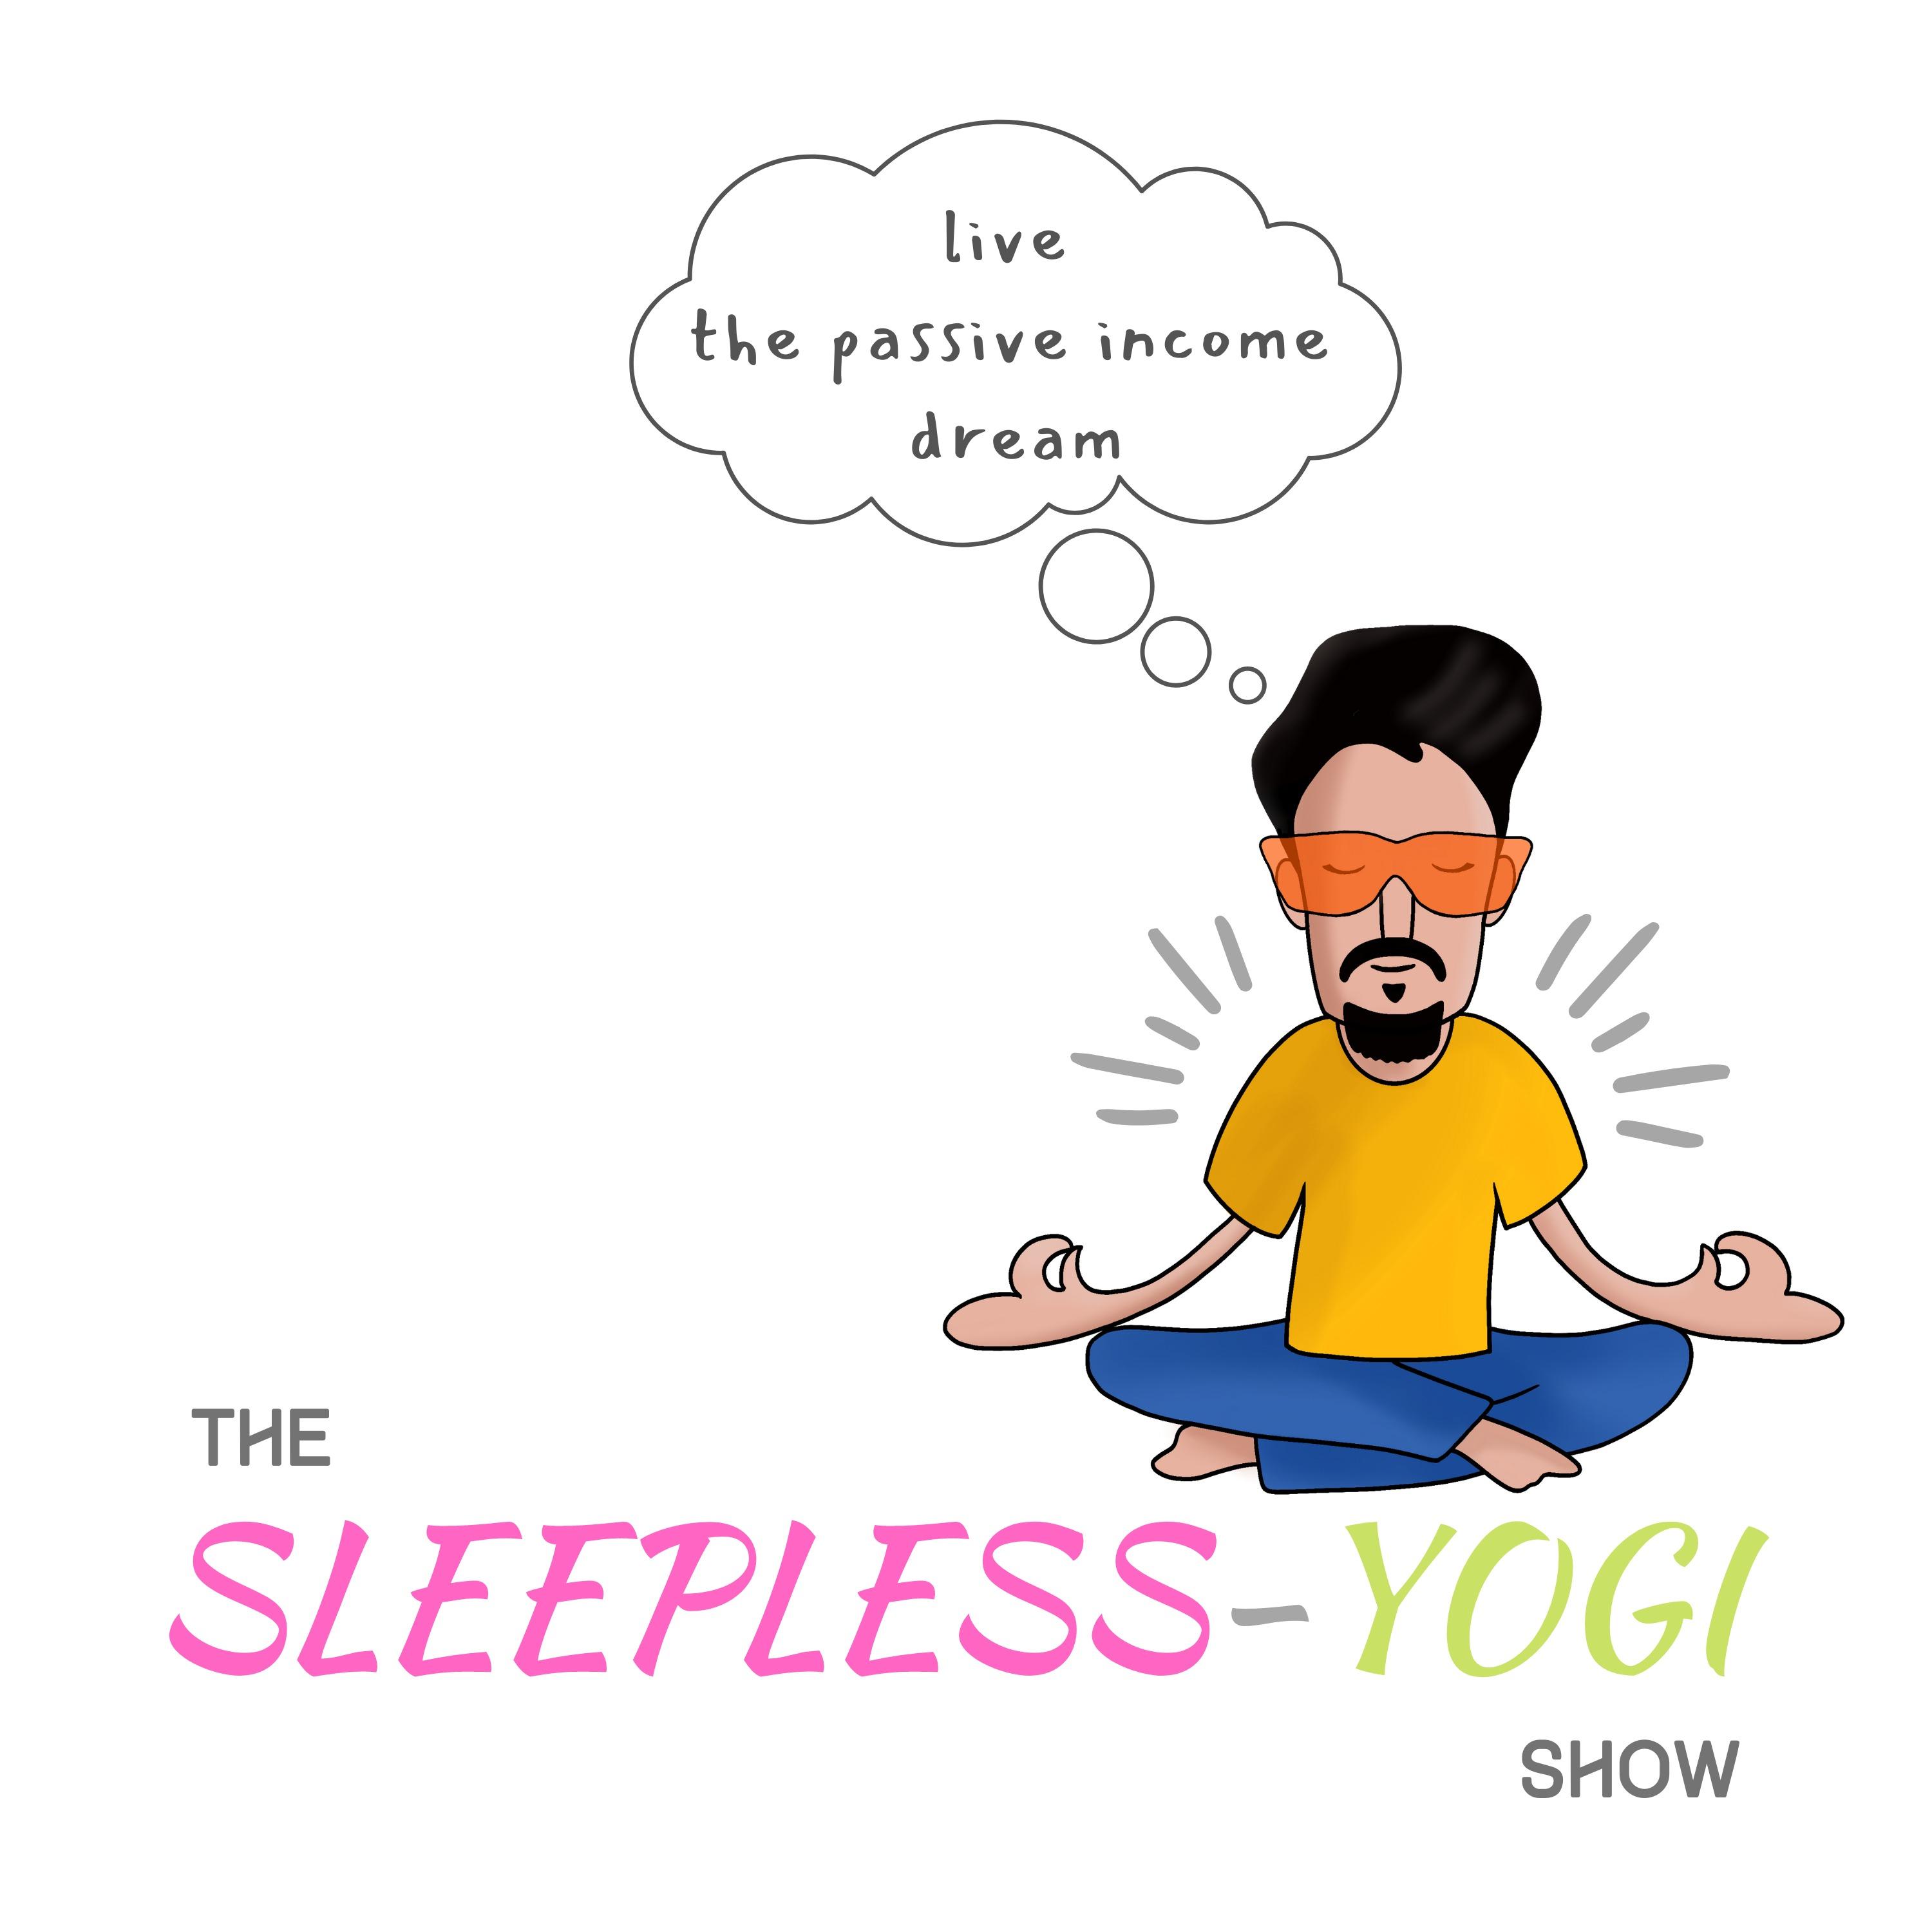 The Sleepless Yogi Show